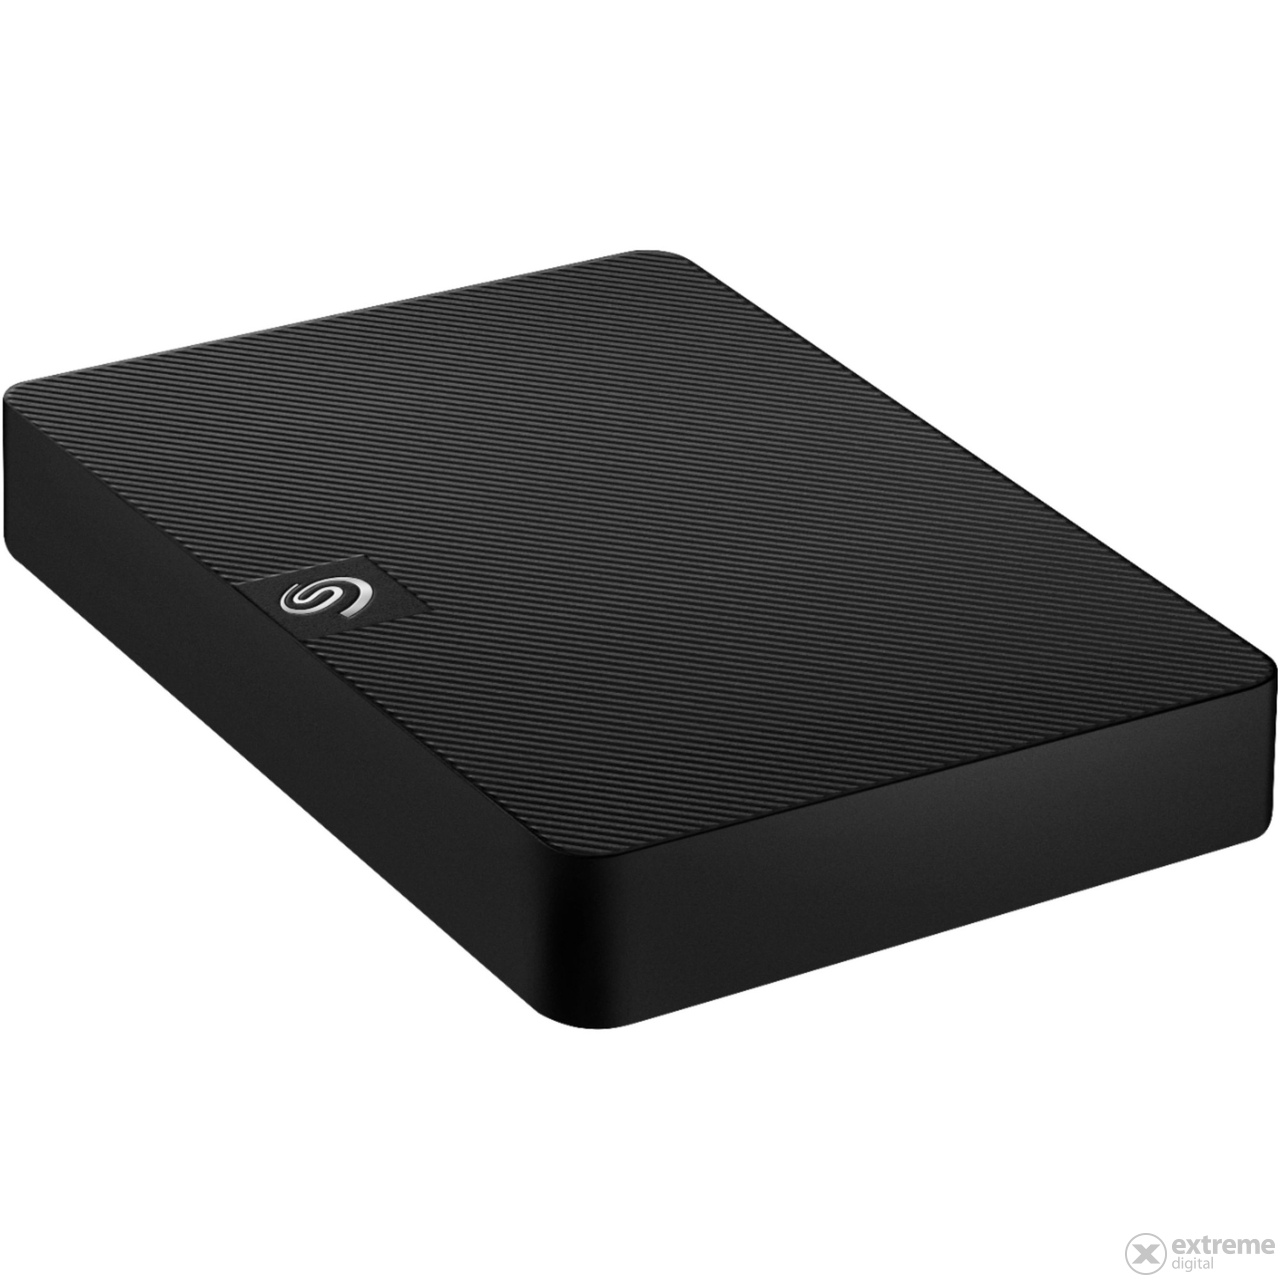 Seagate Expansion externí pevný disk, 5TB, 2,5", USB 3.0, černý